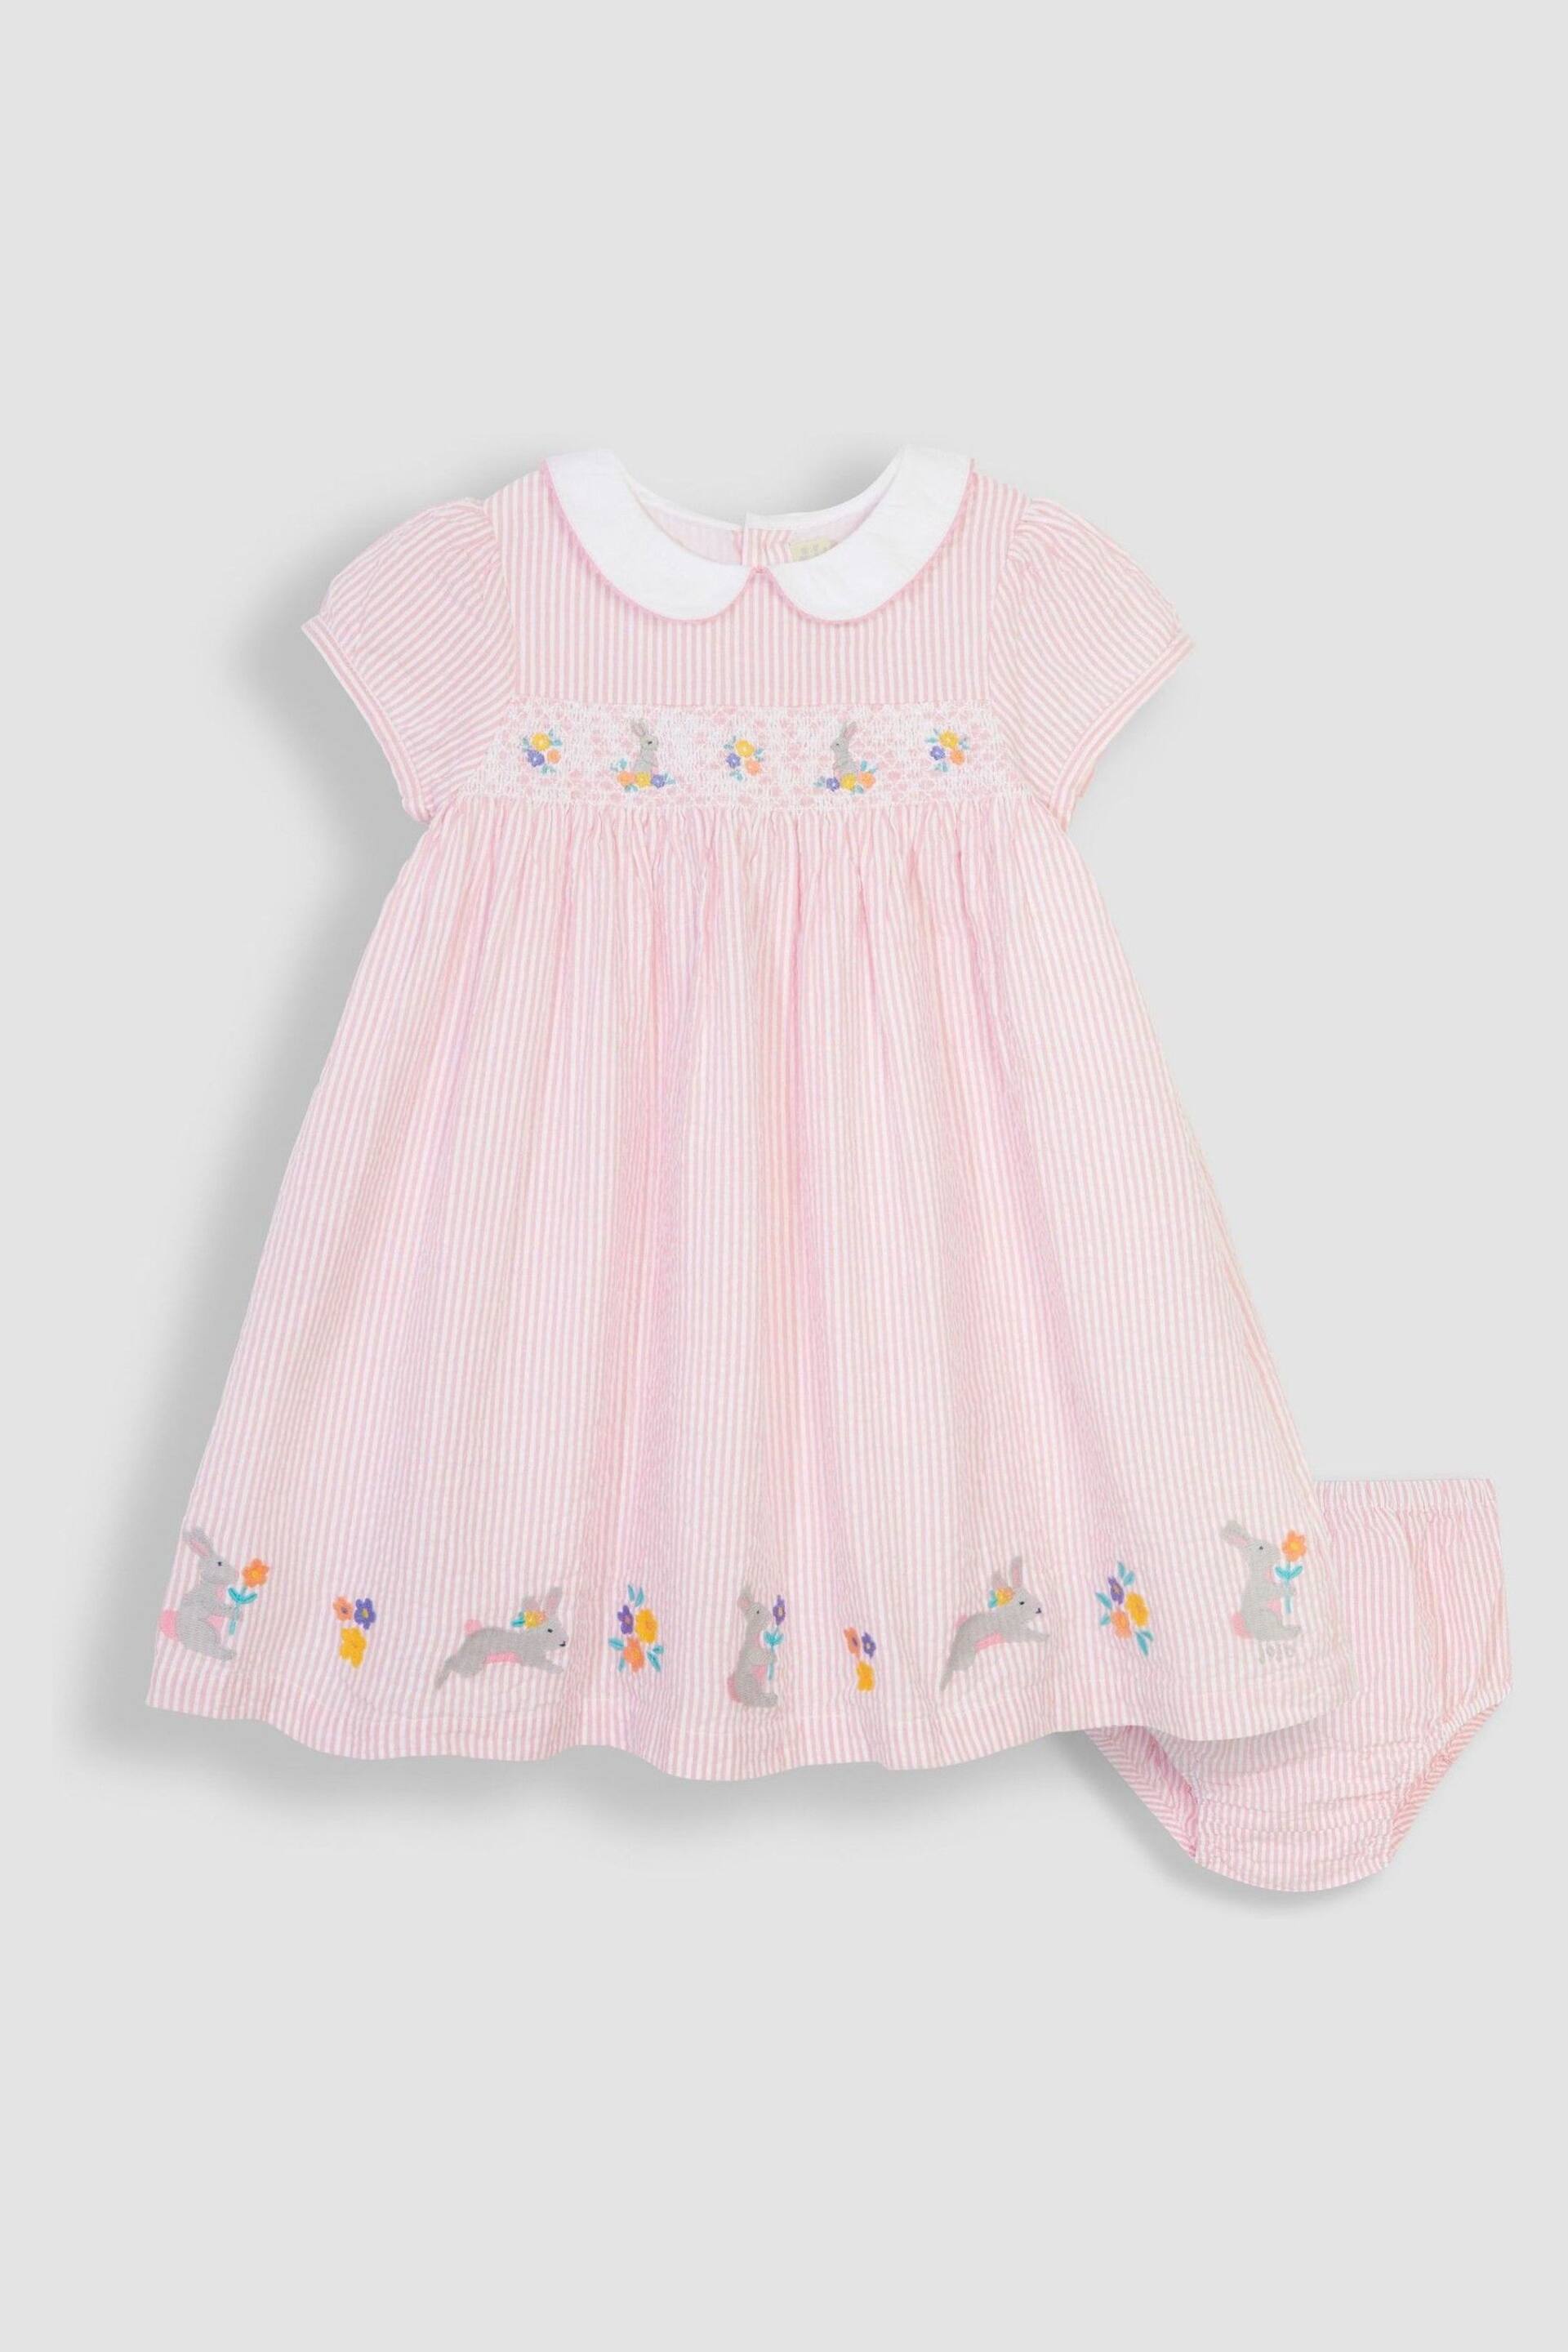 JoJo Maman Bébé Pink Bunny Embroidered Smocked Dress - Image 1 of 4